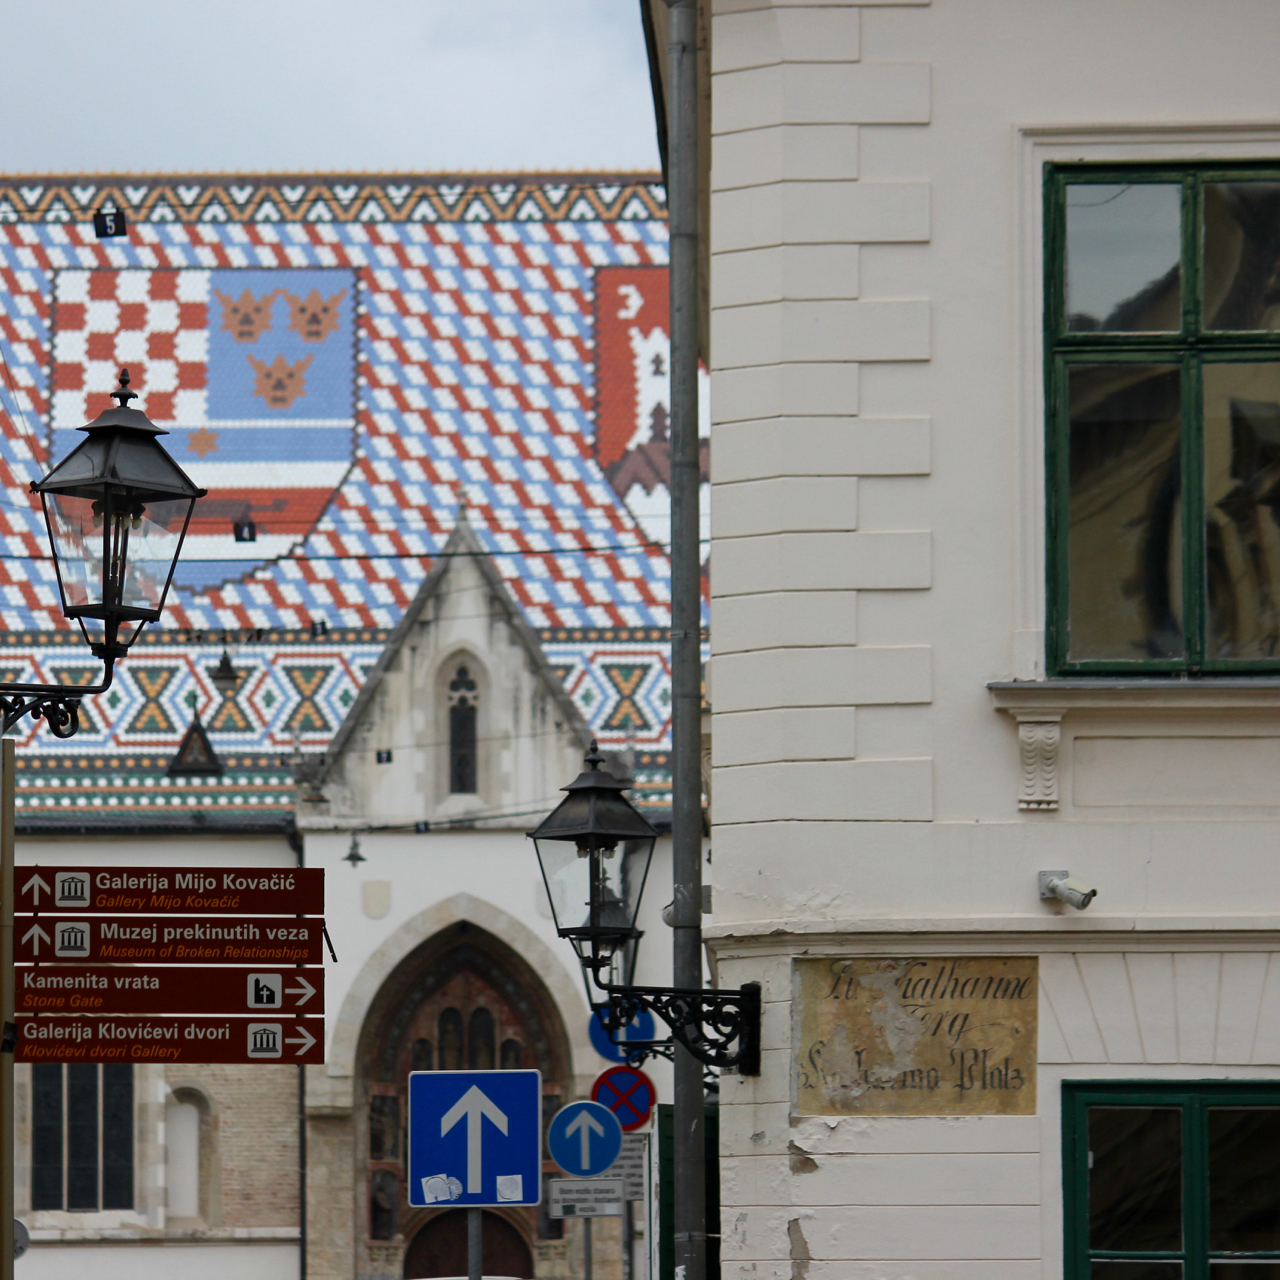 Zagreb, Croatia - 2 (6)